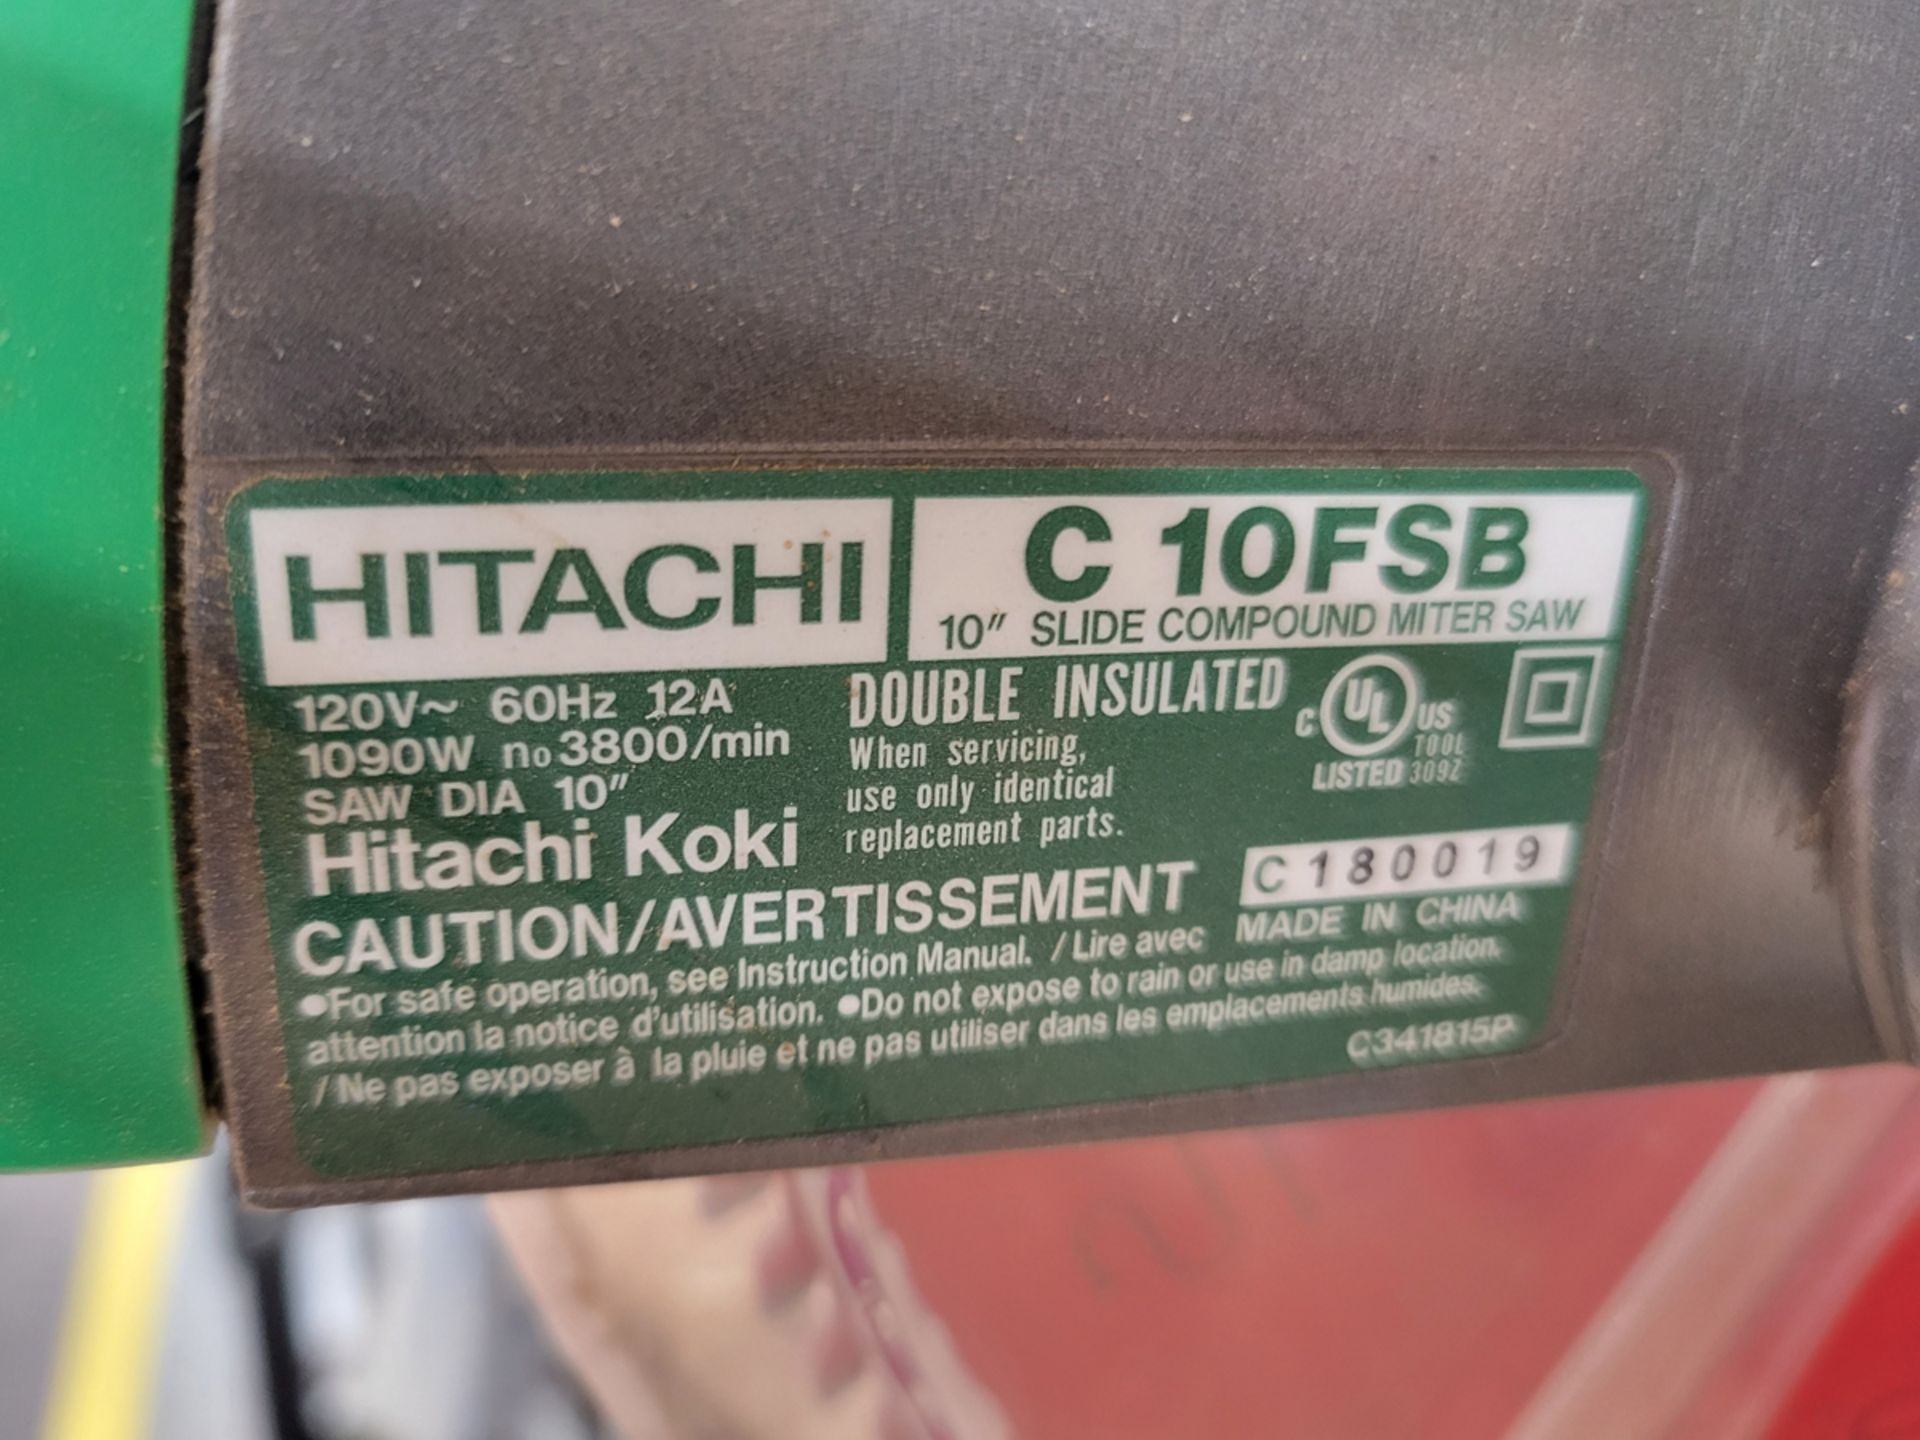 Hitachi Model: C10FSB 10" Slide Compound Miter Saw - Image 5 of 6